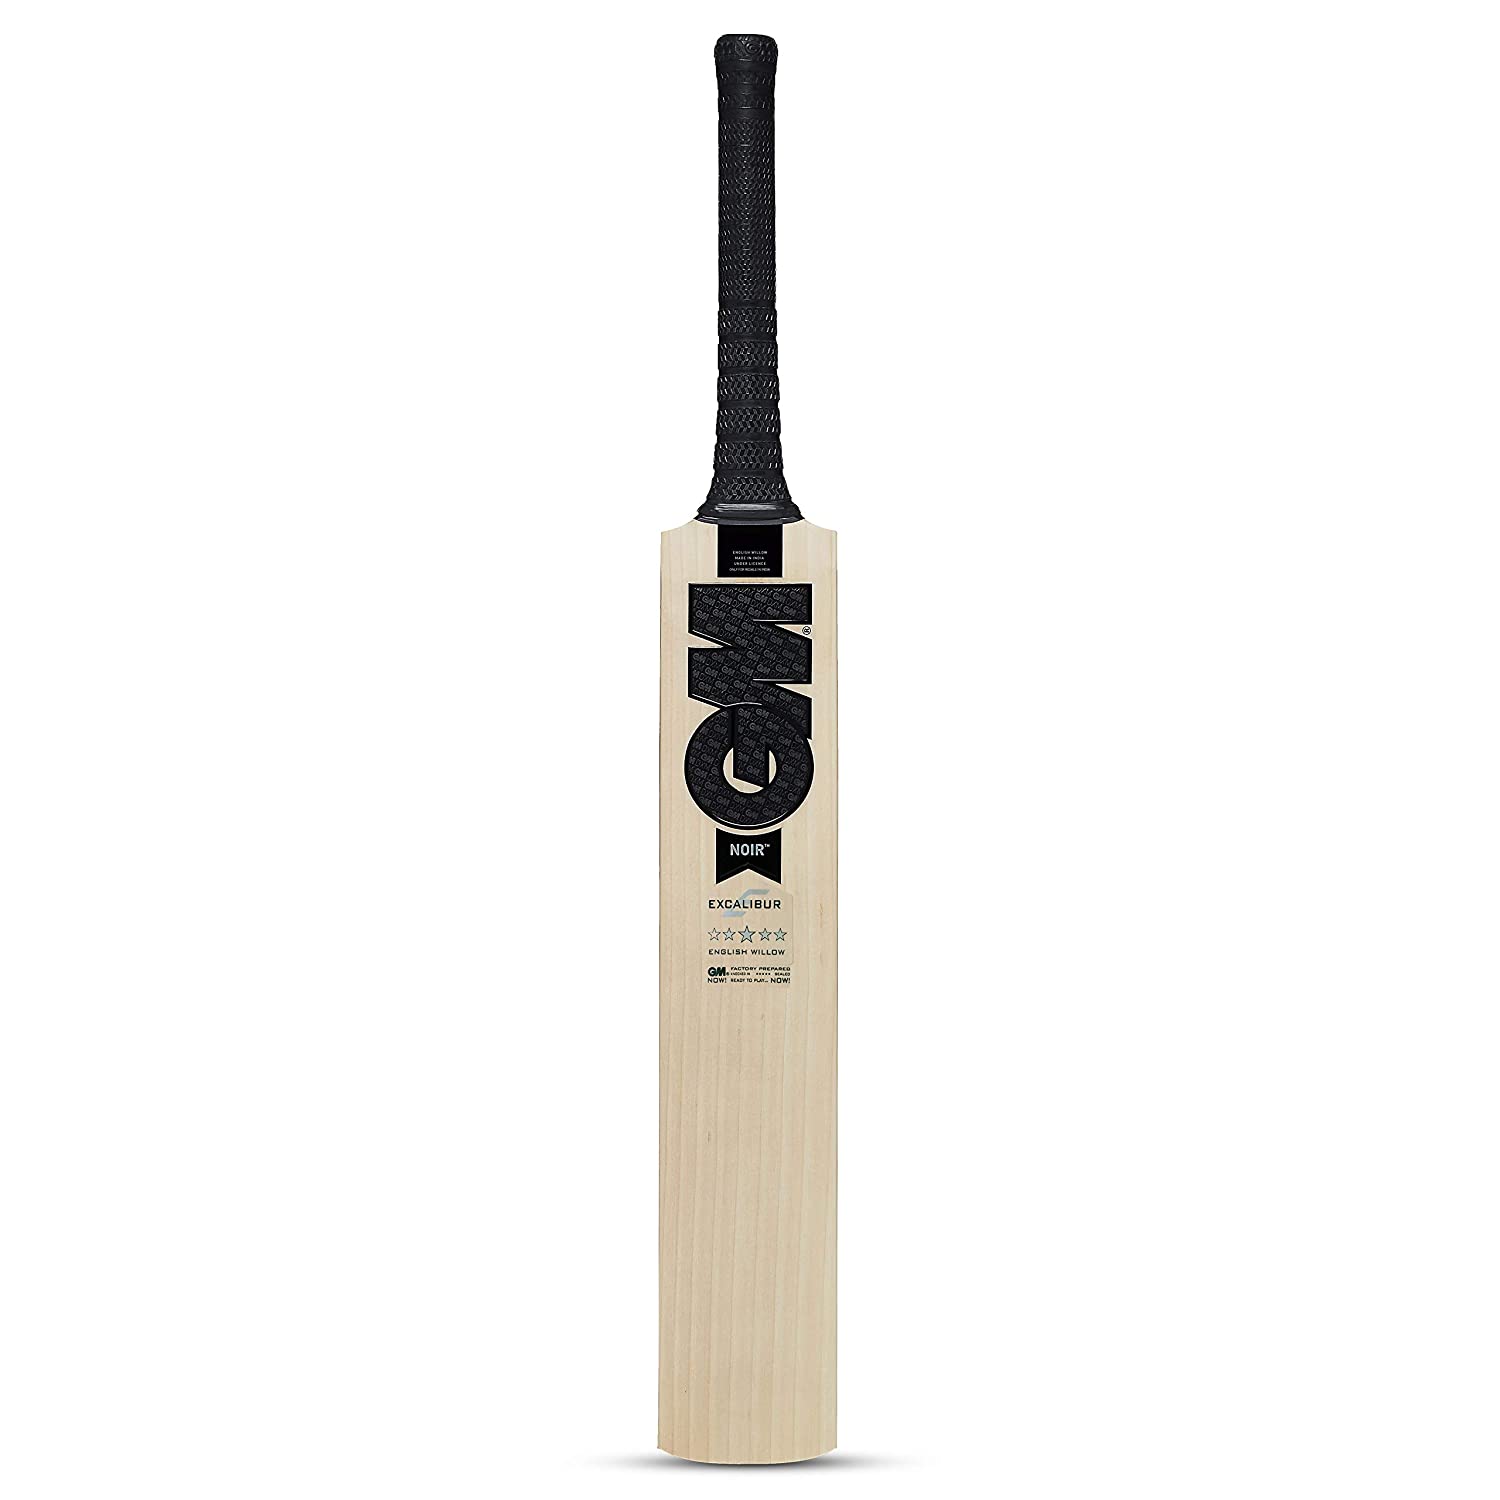 GM Noir Excalibur English Willow Cricket Bat - Best Price online Prokicksports.com